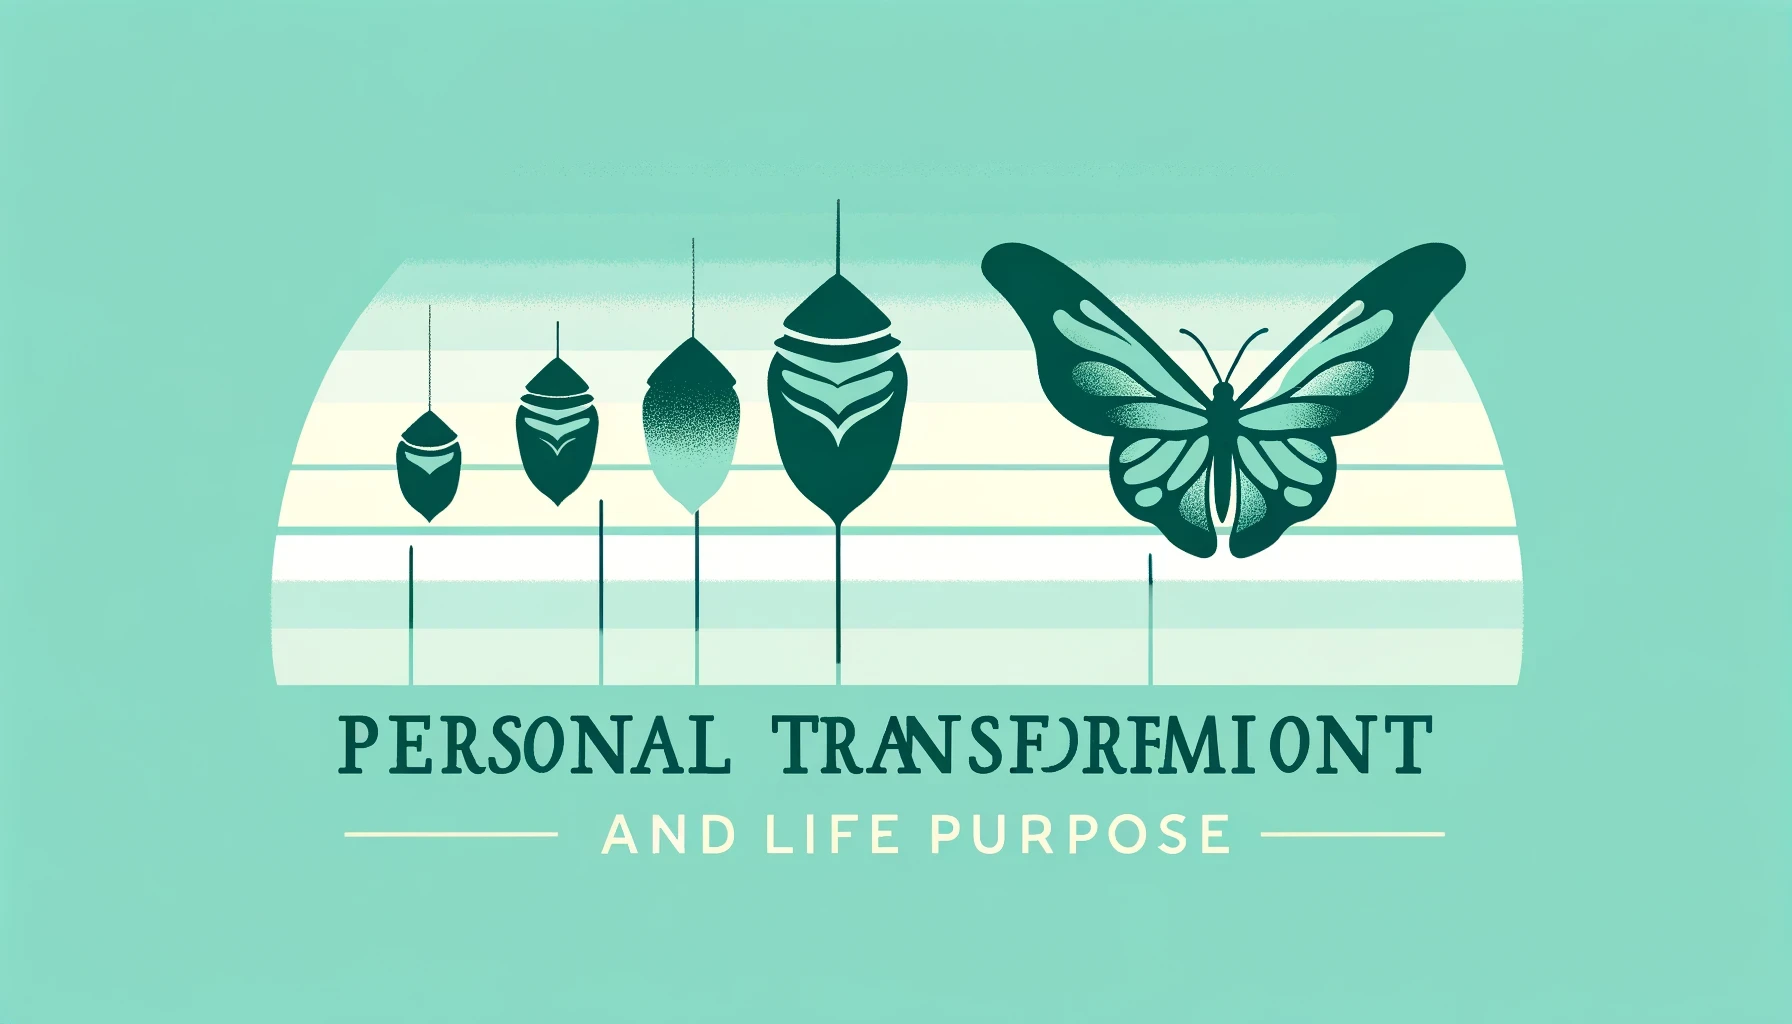 Spiritual niches for blogging transformation